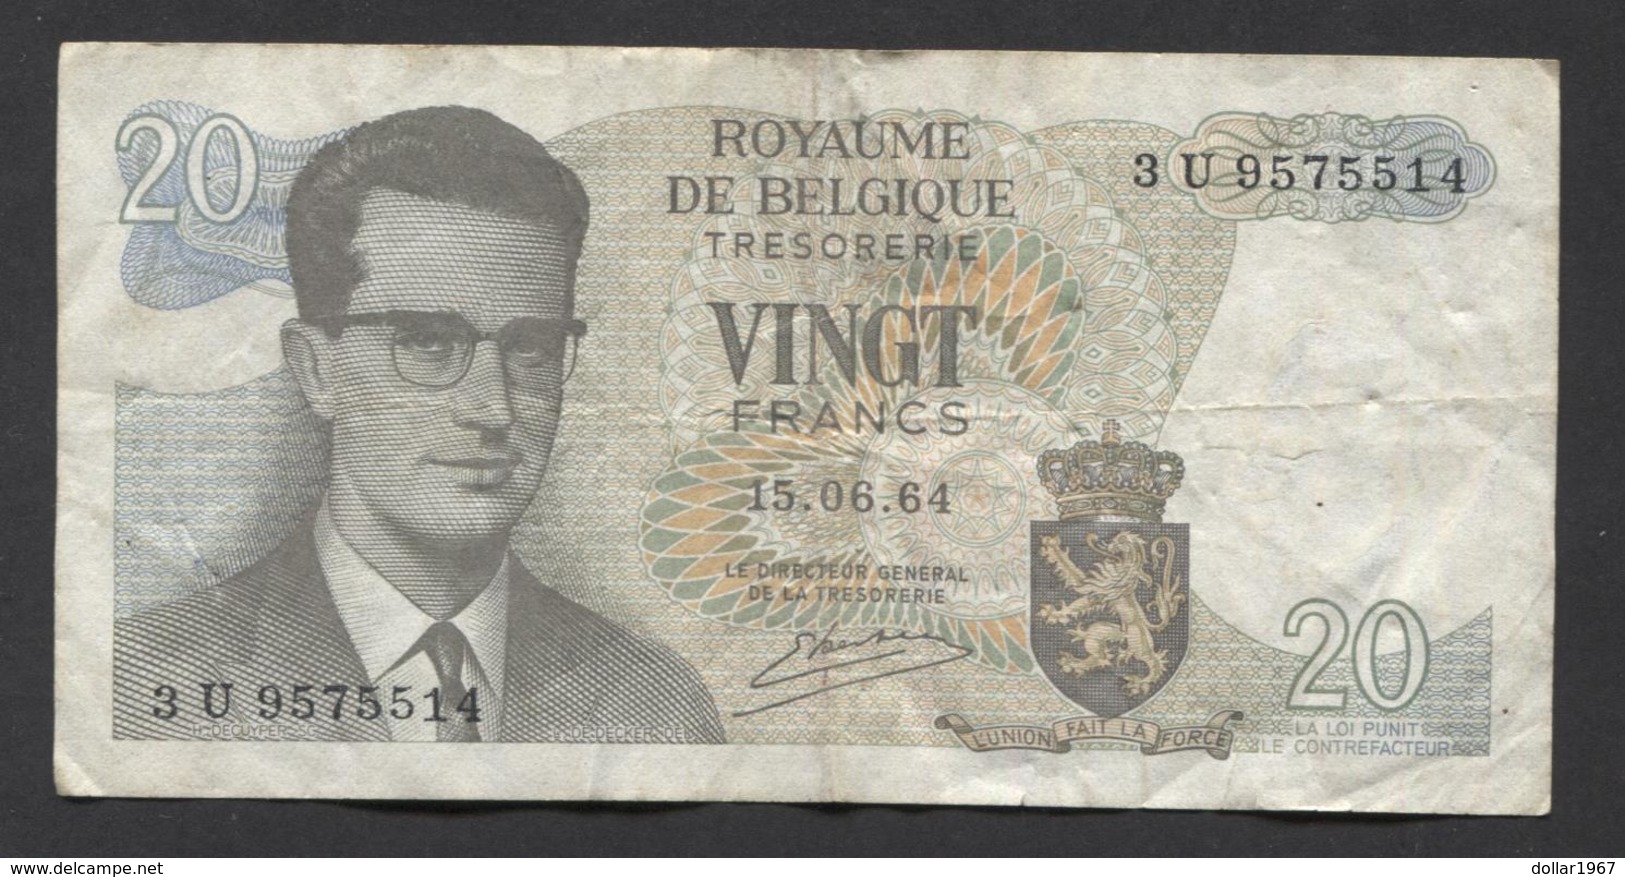 België Belgique Belgium 15 06 1964 -  20 Francs Atomium Baudouin. 3 U 9575514 - 20 Francos